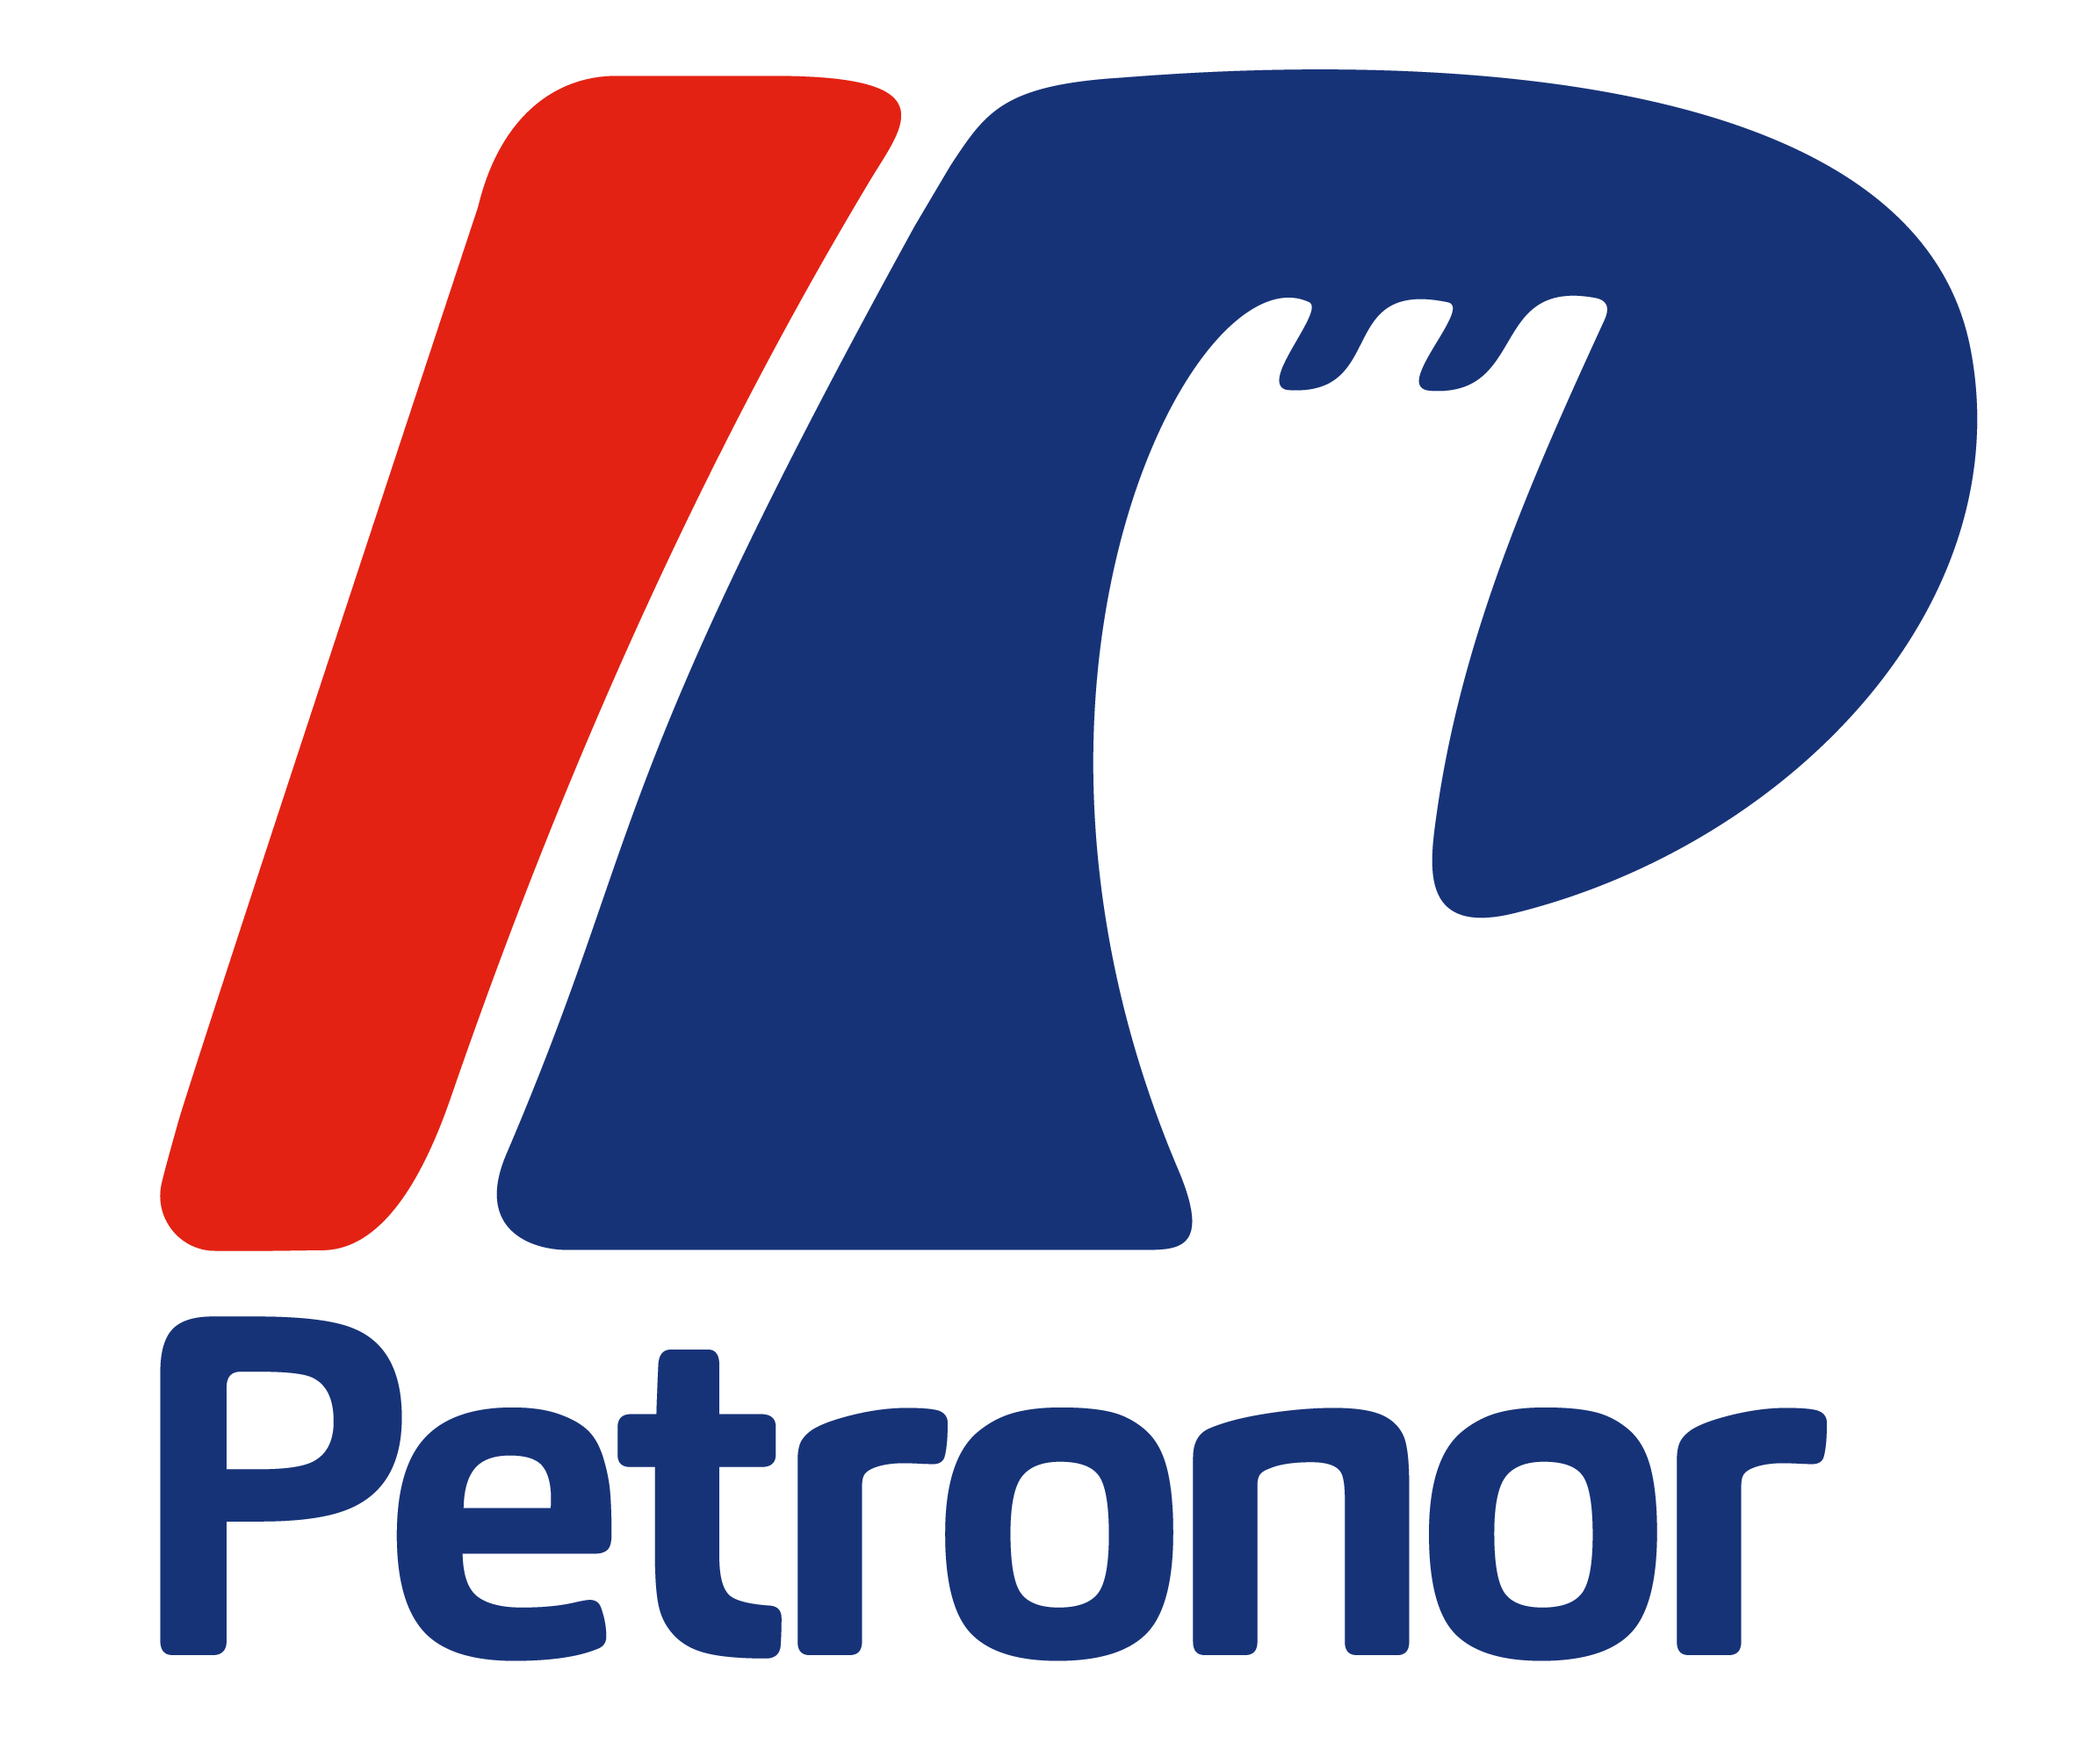 Petronor oil company logo